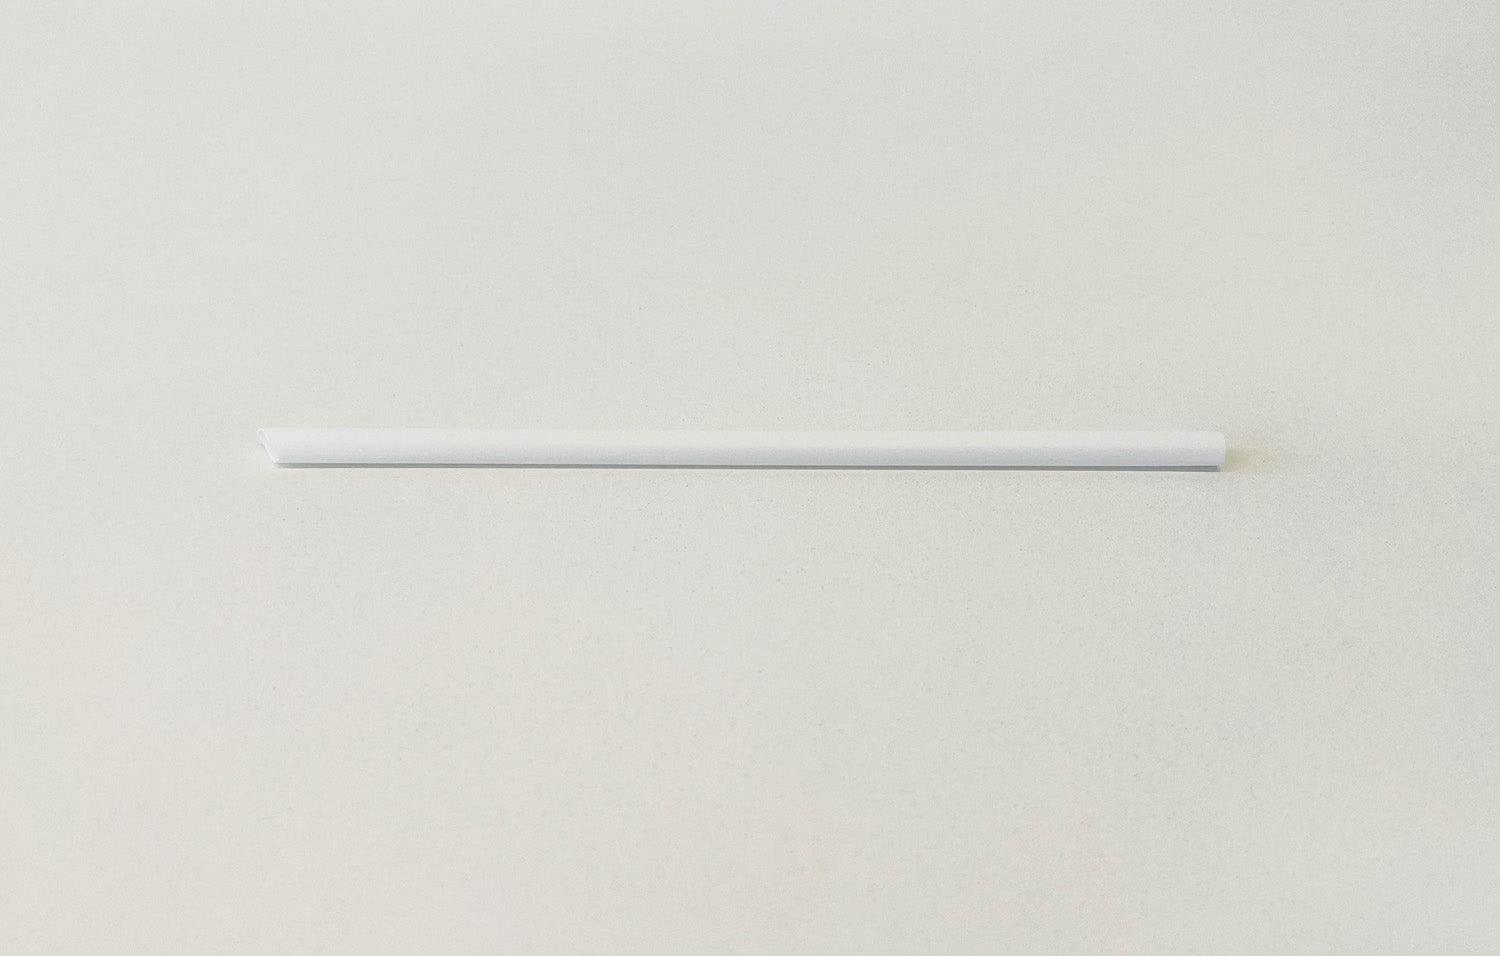 7.8 Inch PLA Wrapped Straw - 5000/case